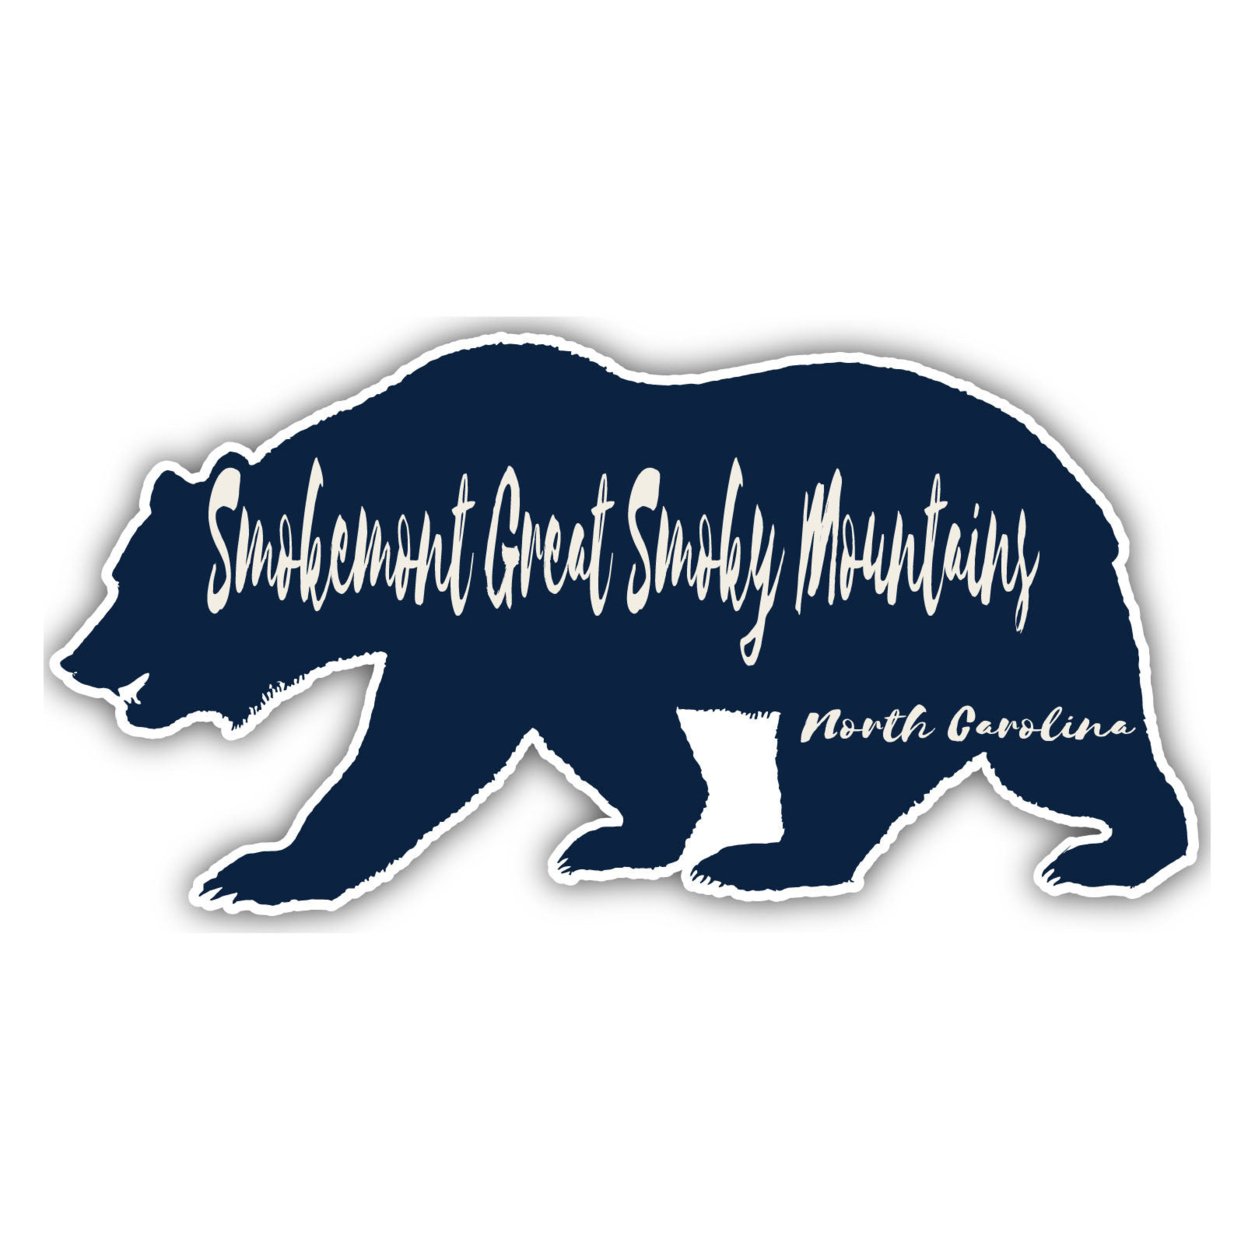 Smokemont Great Smoky Mountains North Carolina Souvenir Decorative Stickers (Choose Theme And Size) - Single Unit, 4-Inch, Bear